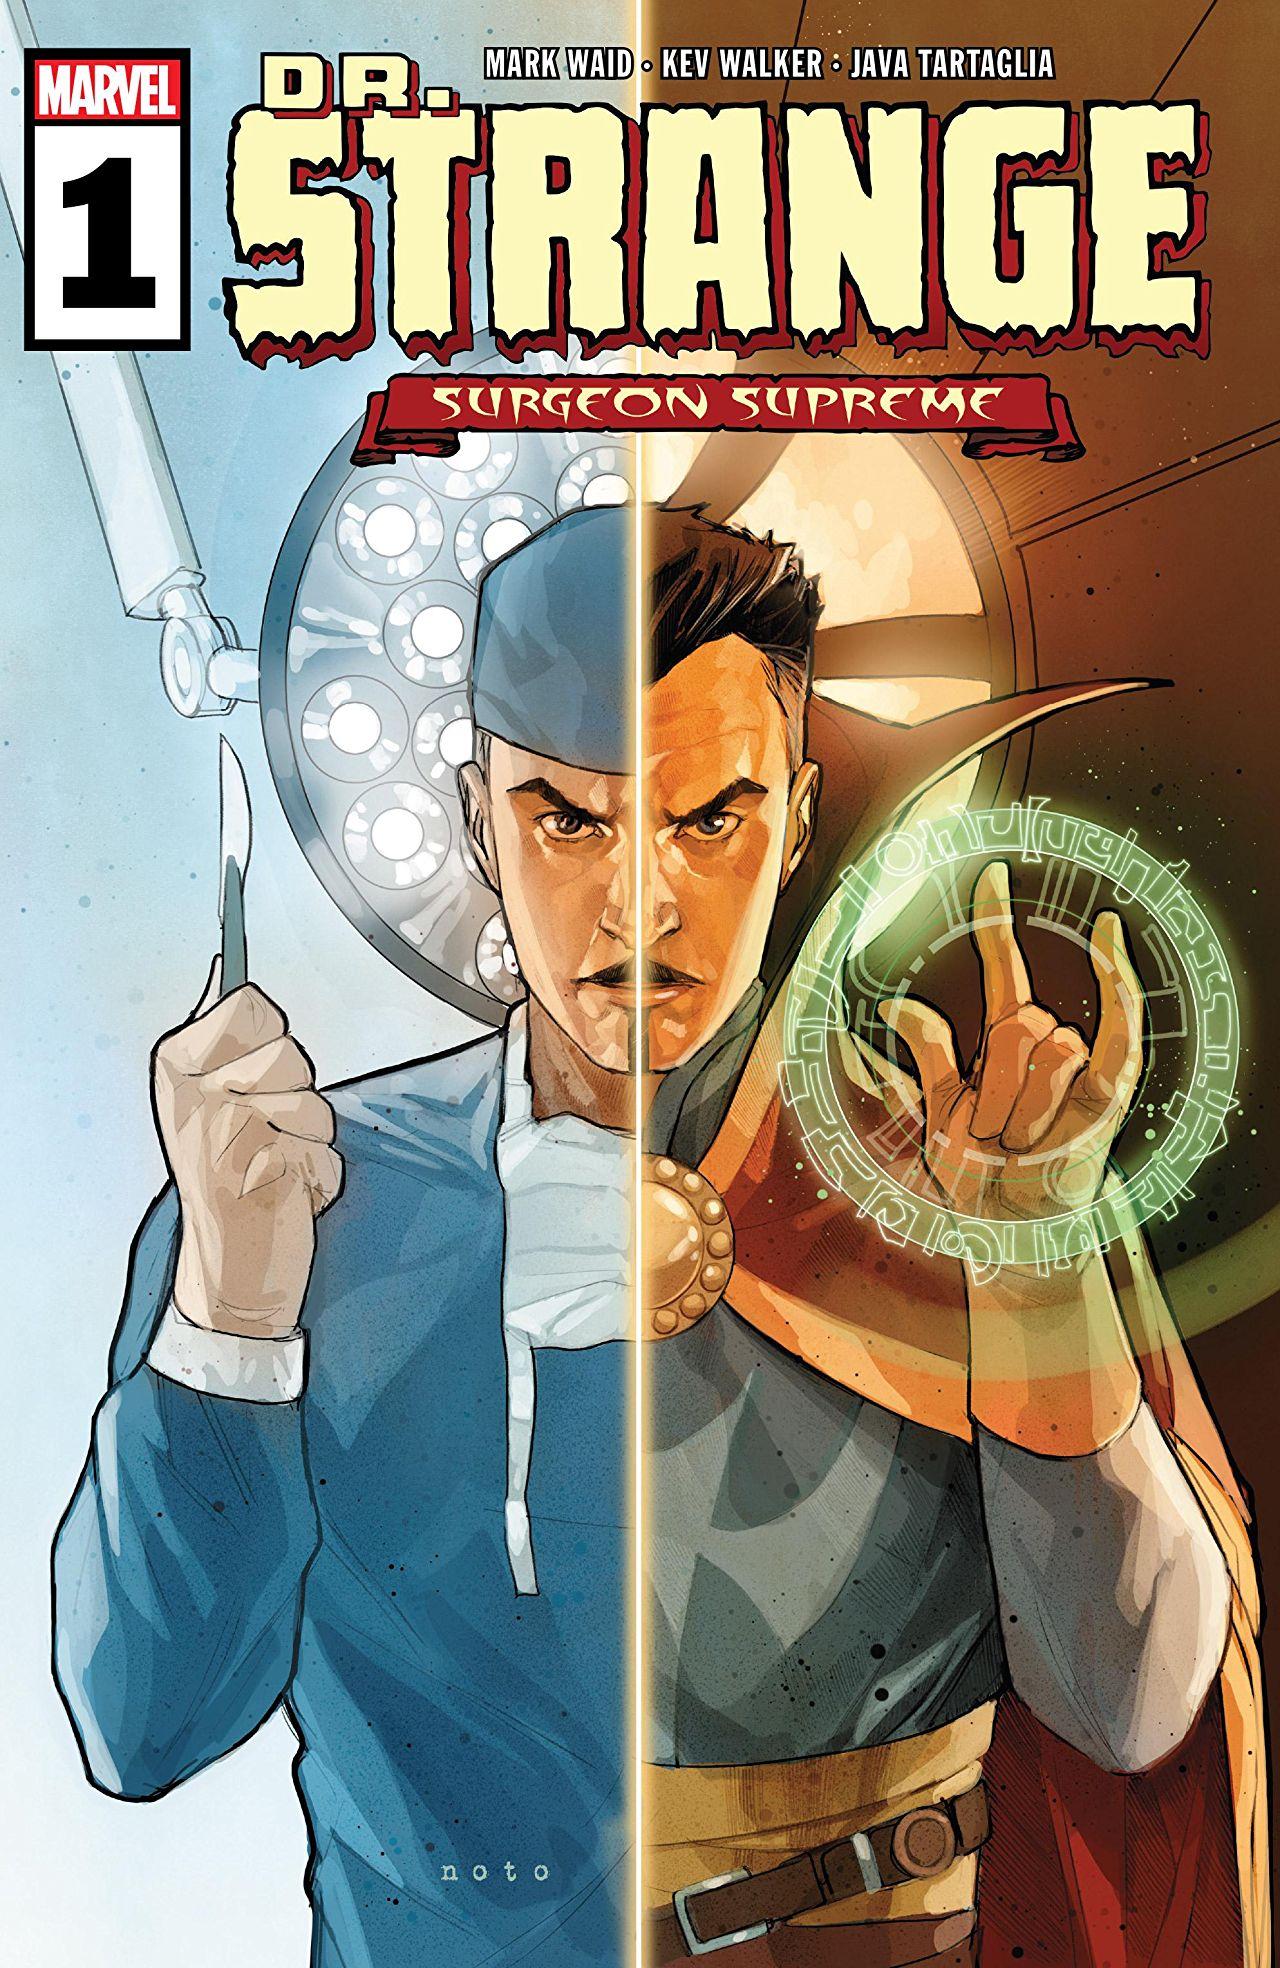 Doctor Strange: Surgeon Supreme Vol. 1 #1